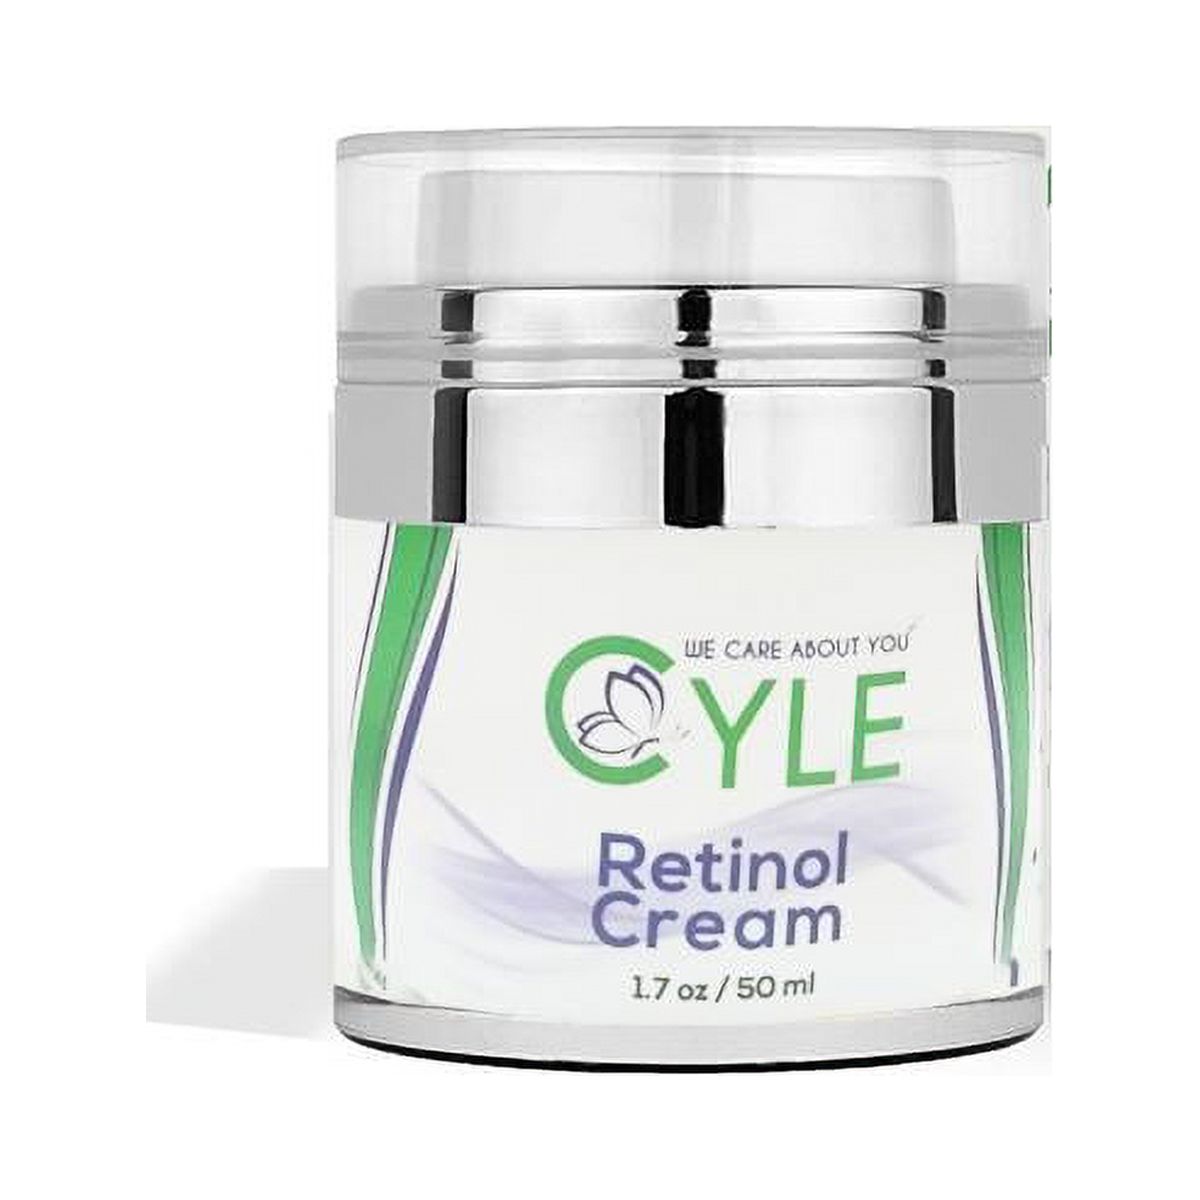 Cyle - Organic Anti-Wrinkle Anti-Aging Retinol Moisturizer Cream (1.7 fl oz/50 ml) - image 1 of 4